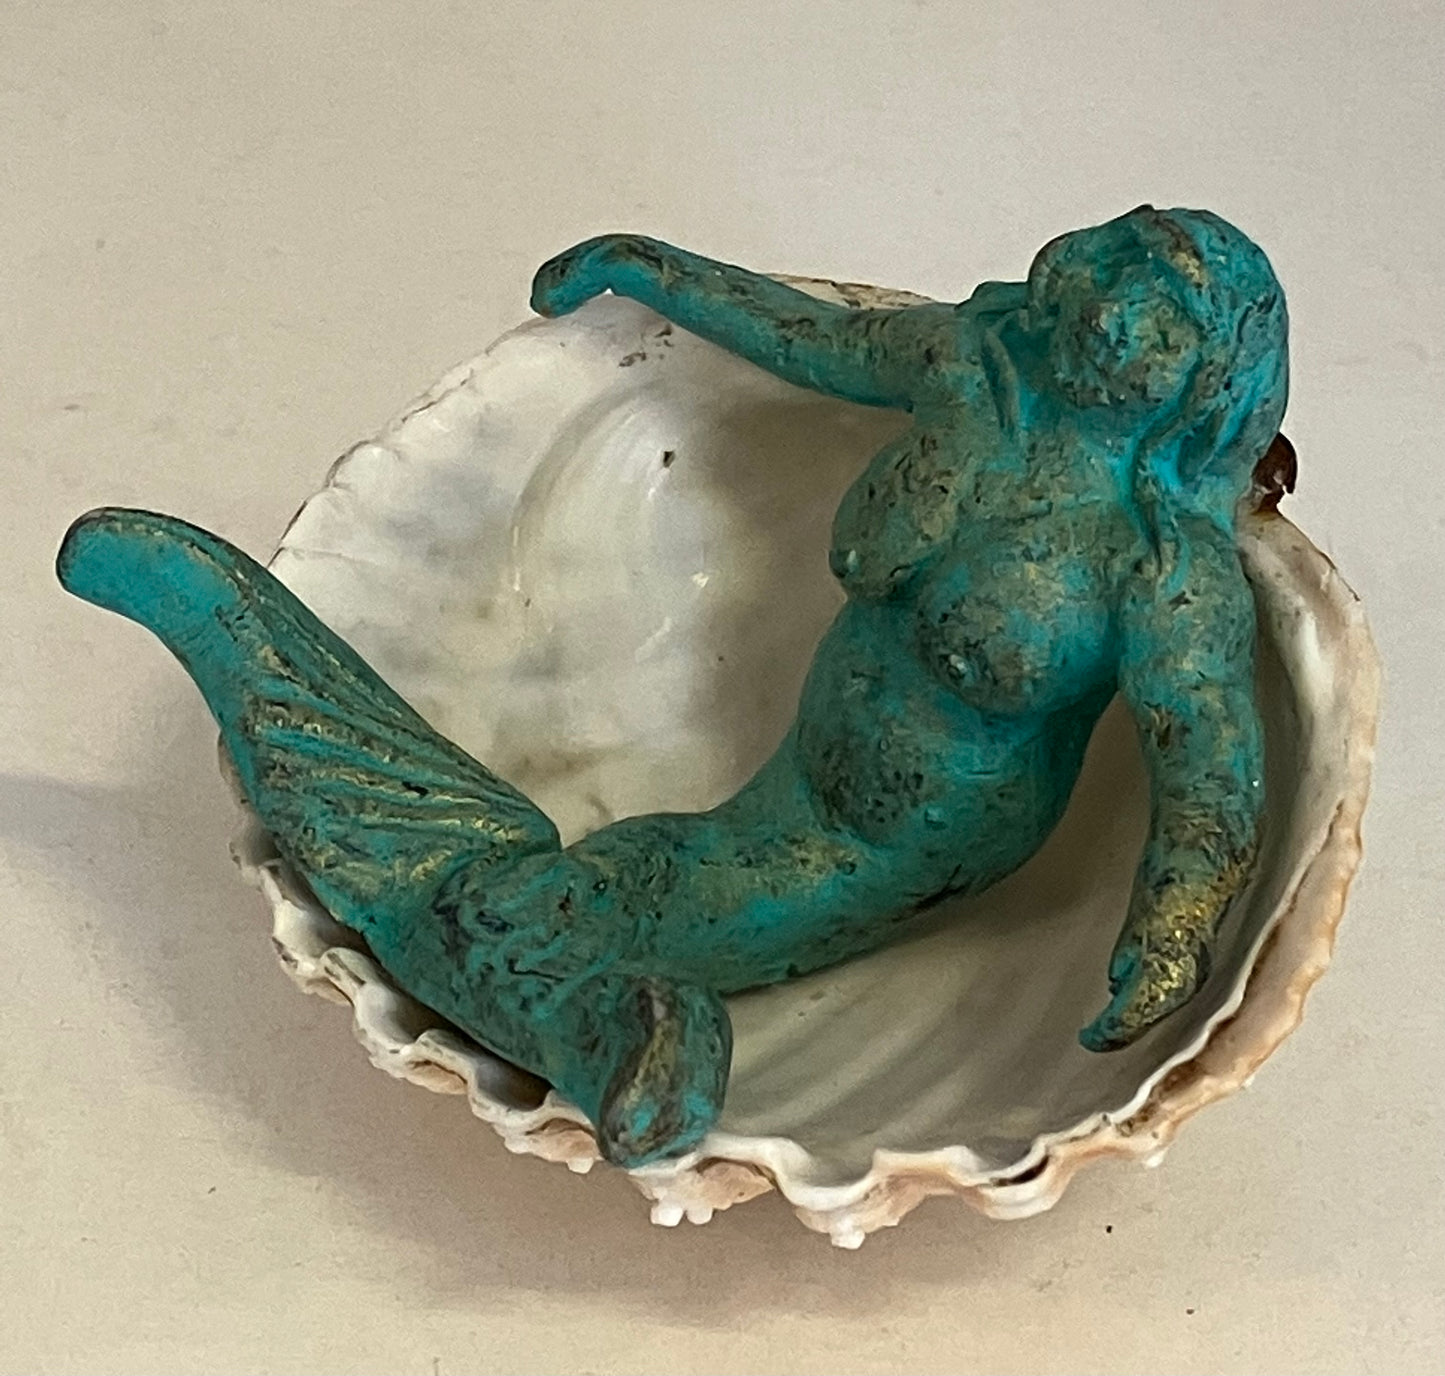 Mermaid sculpture cockle jacuzzi